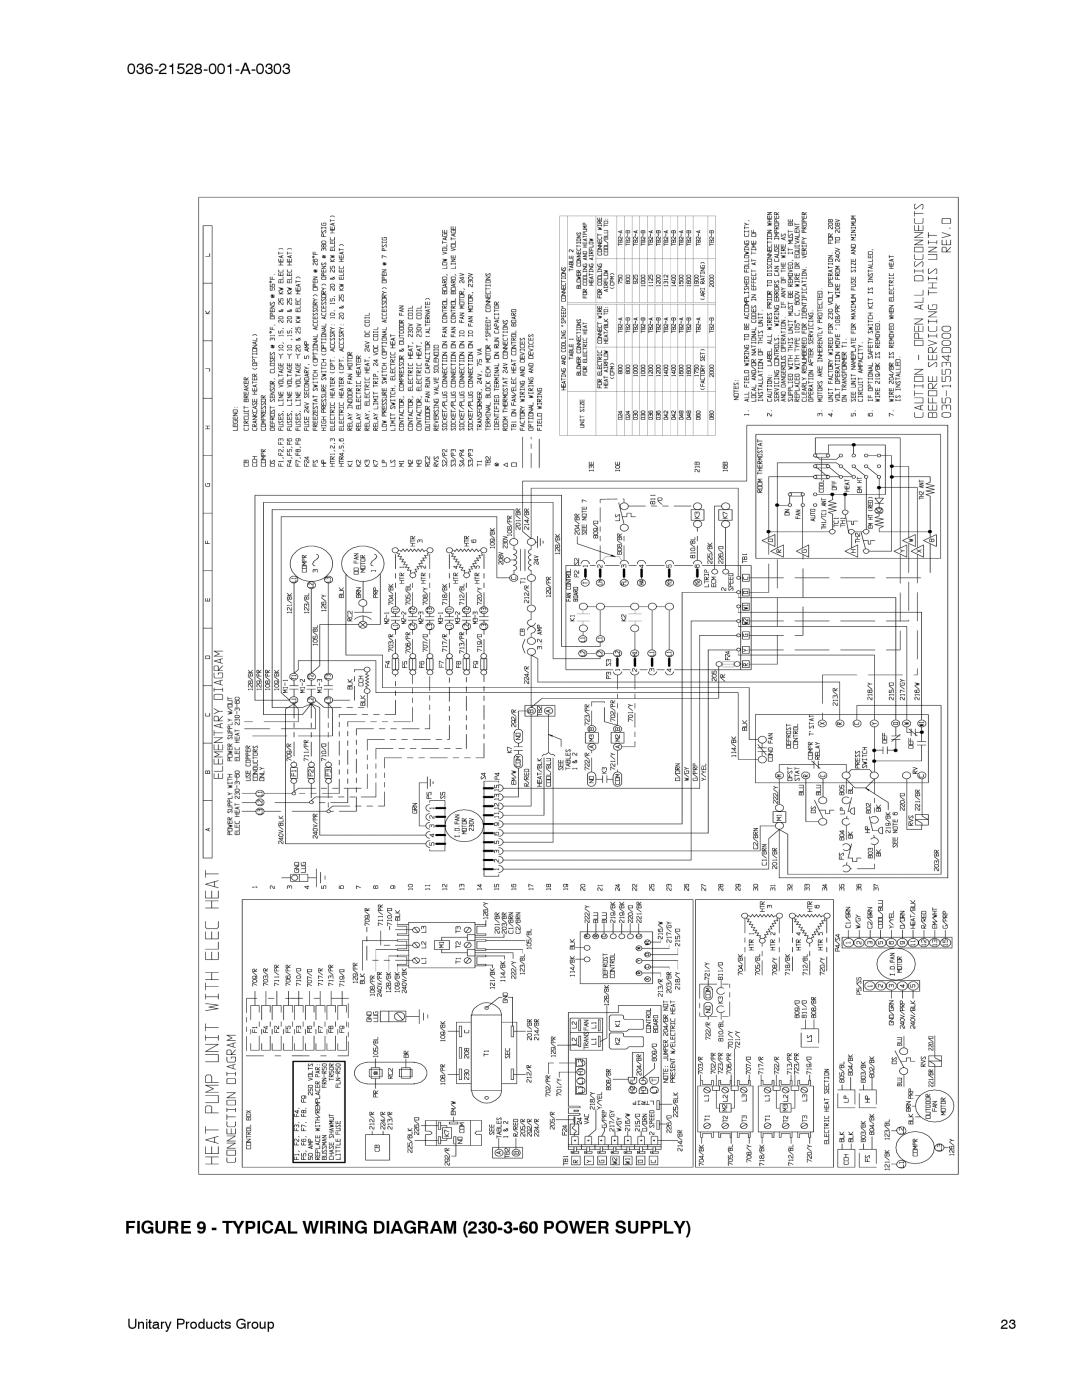 York B1HP024 THRU 048 manual 036-21528-001-A-0303, Unitary Products Group 